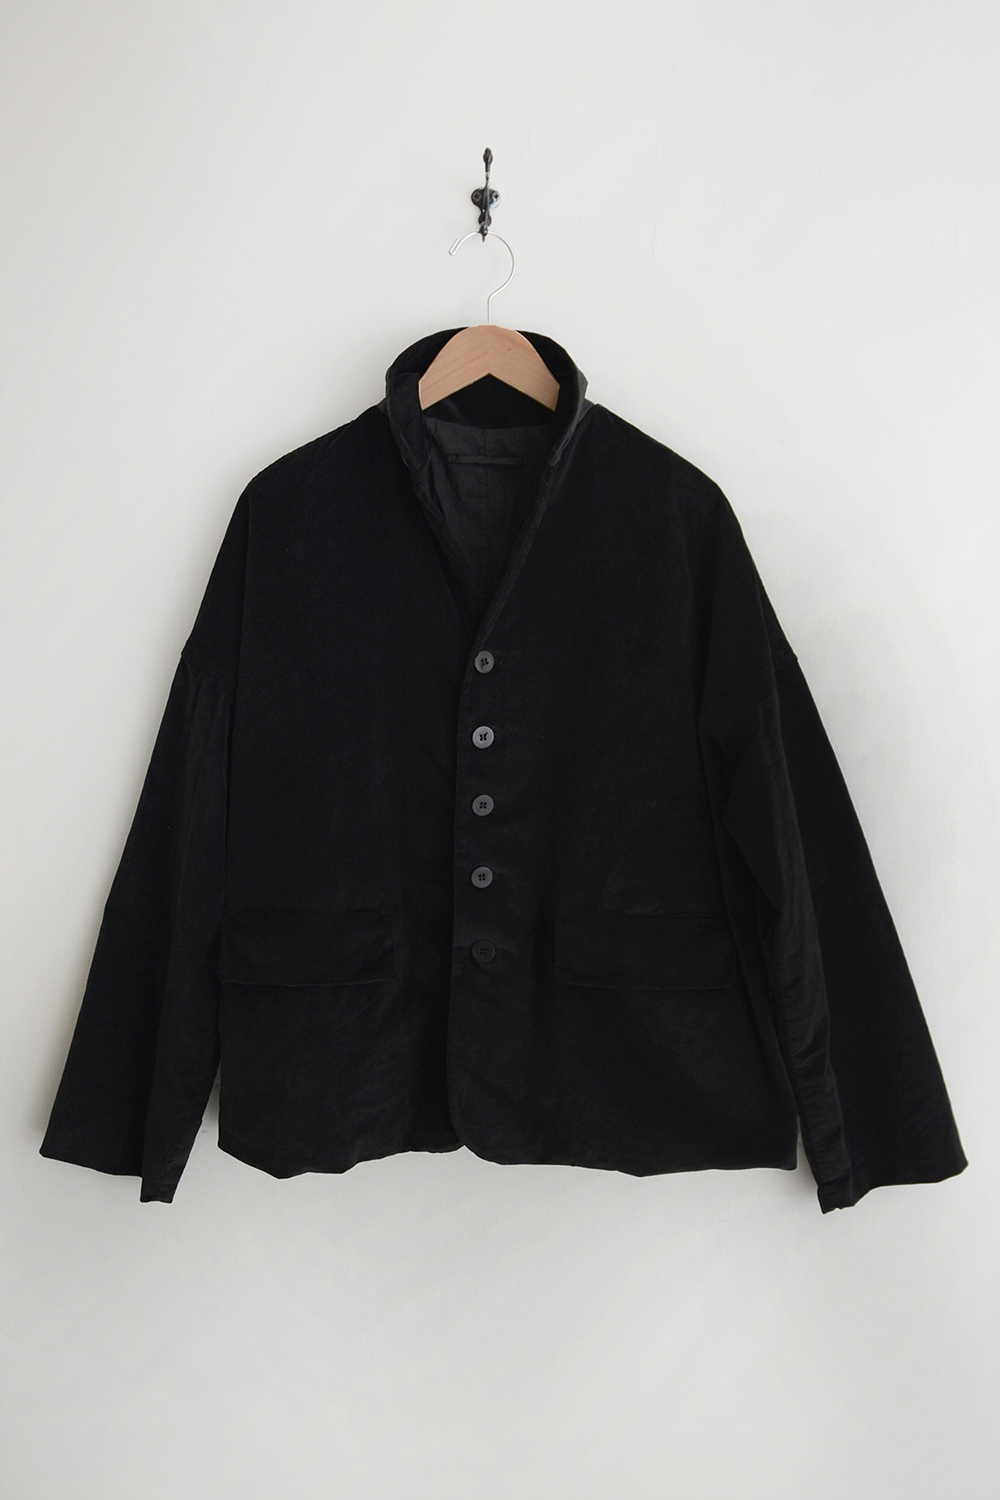 album di famiglia, u4231 women's velvet blazer in slate black the top picture